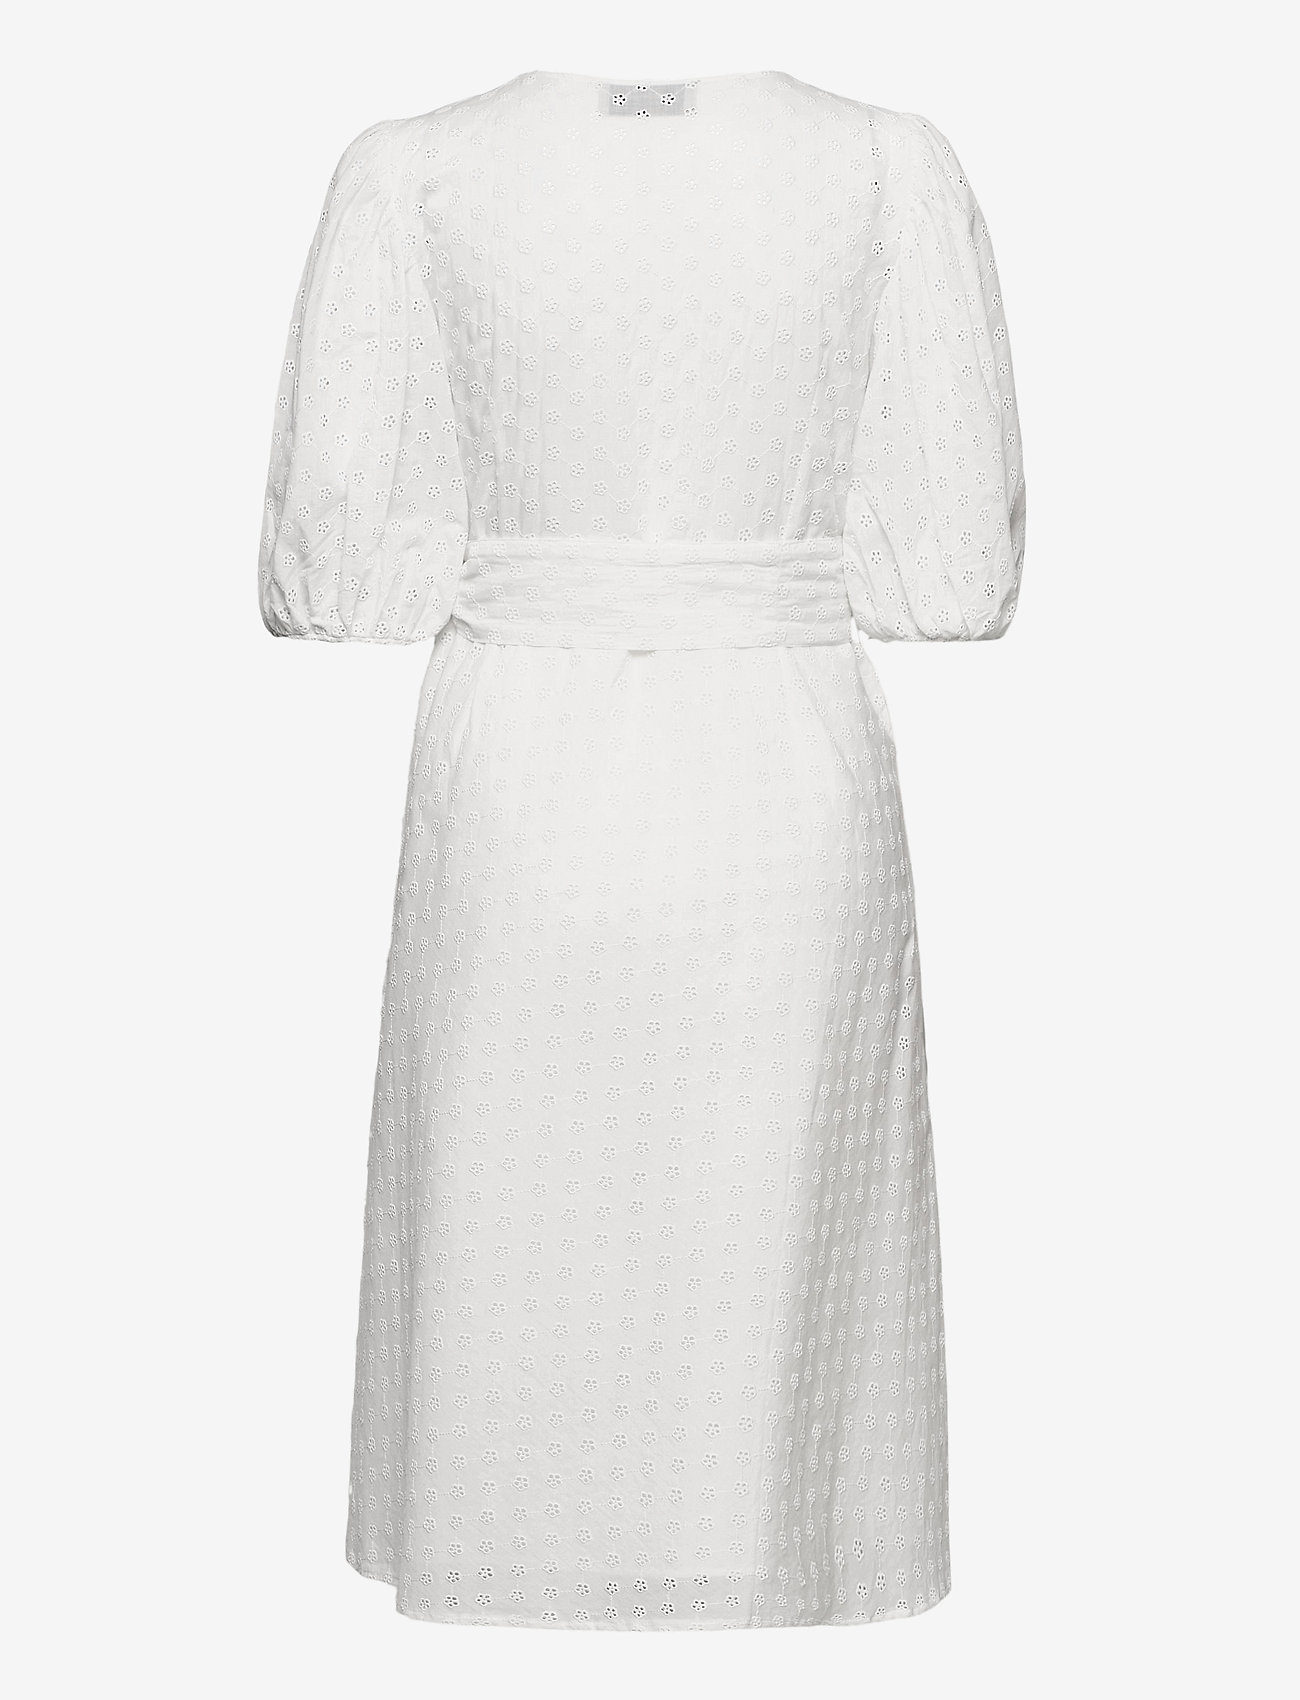 Ivana Helsinki - Heljä dress - white - 1